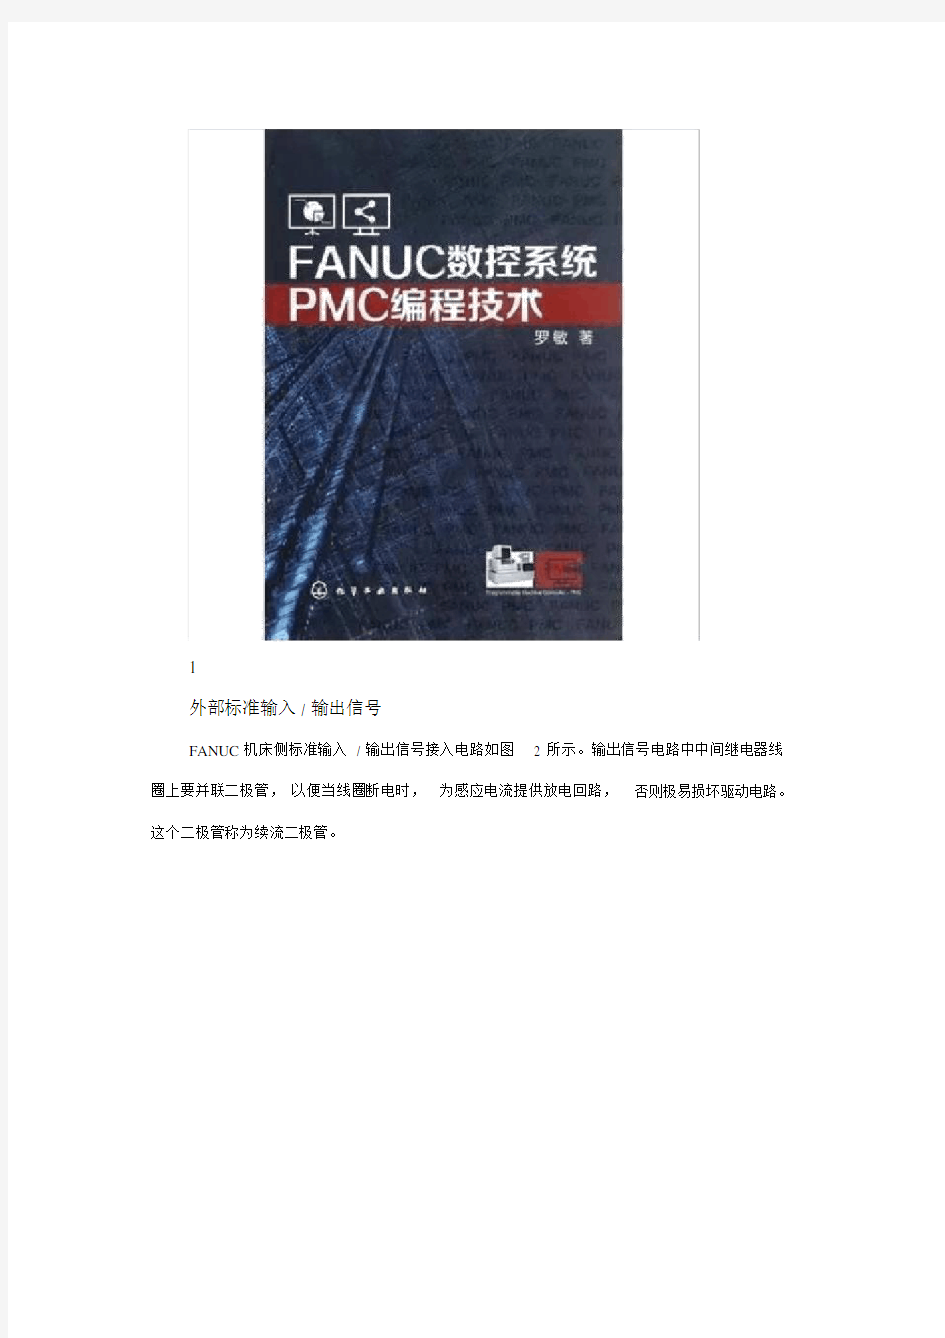 FANUC系统PMC编程.doc